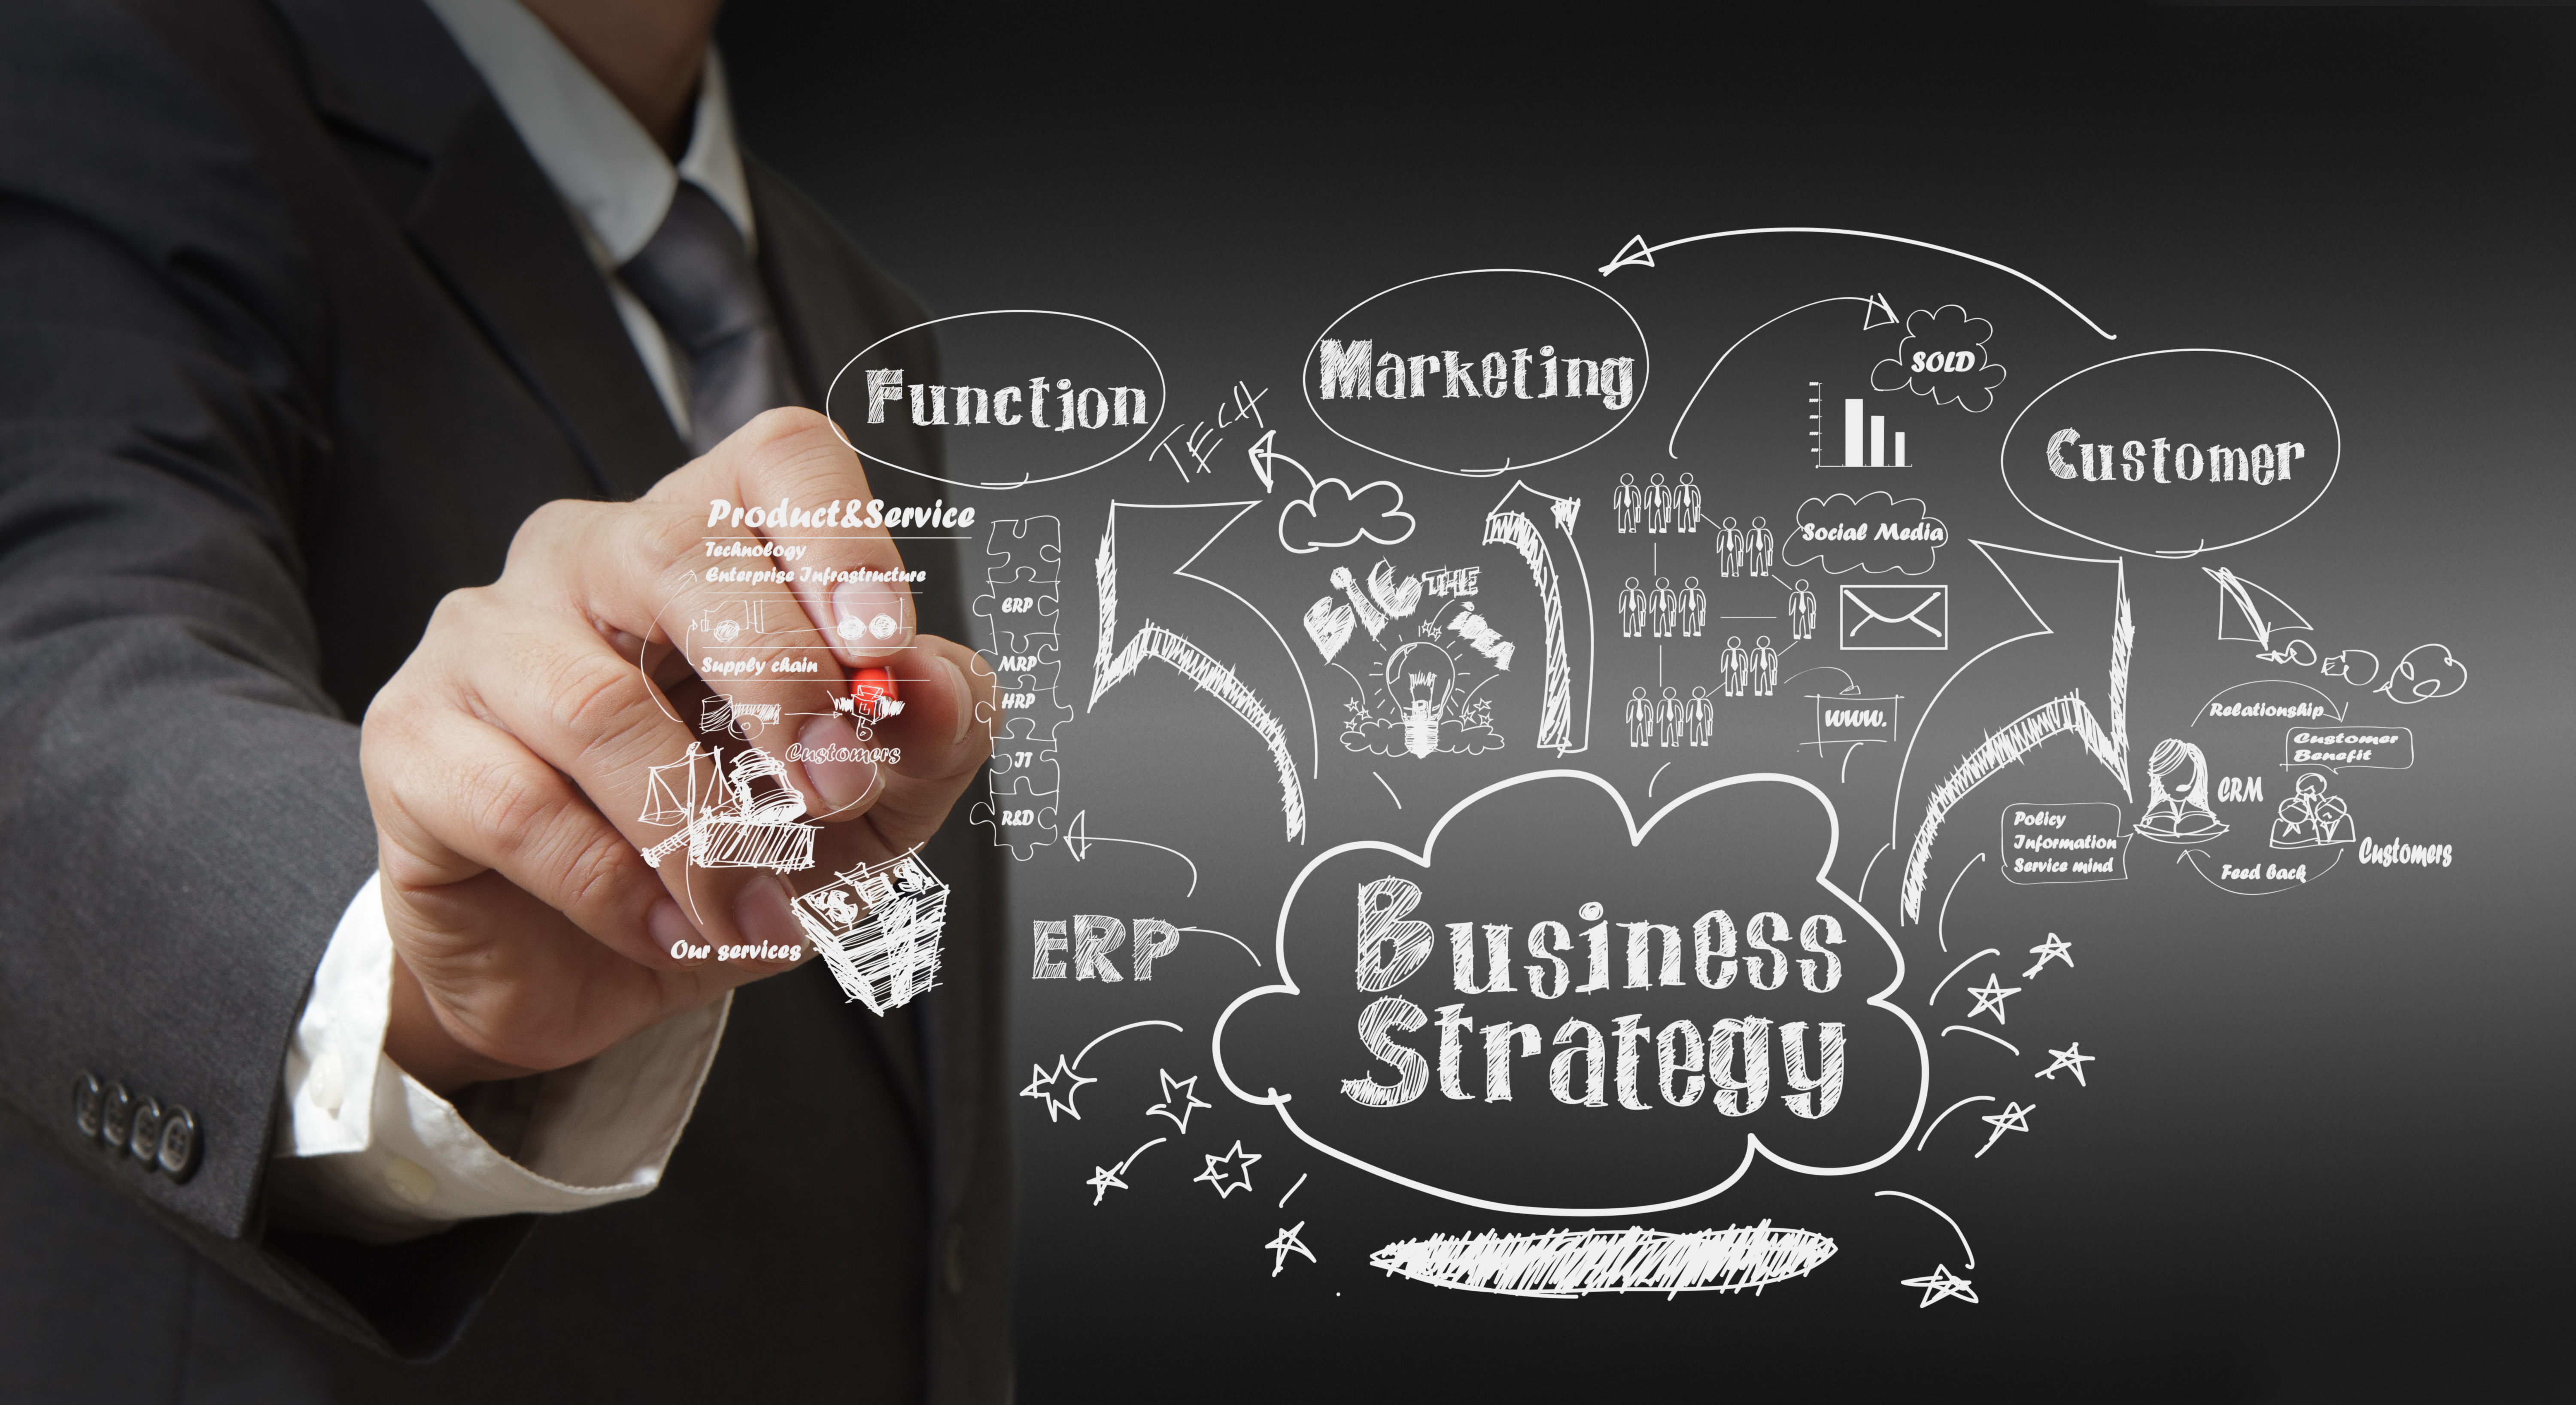 EVH Marketing writing business strategy